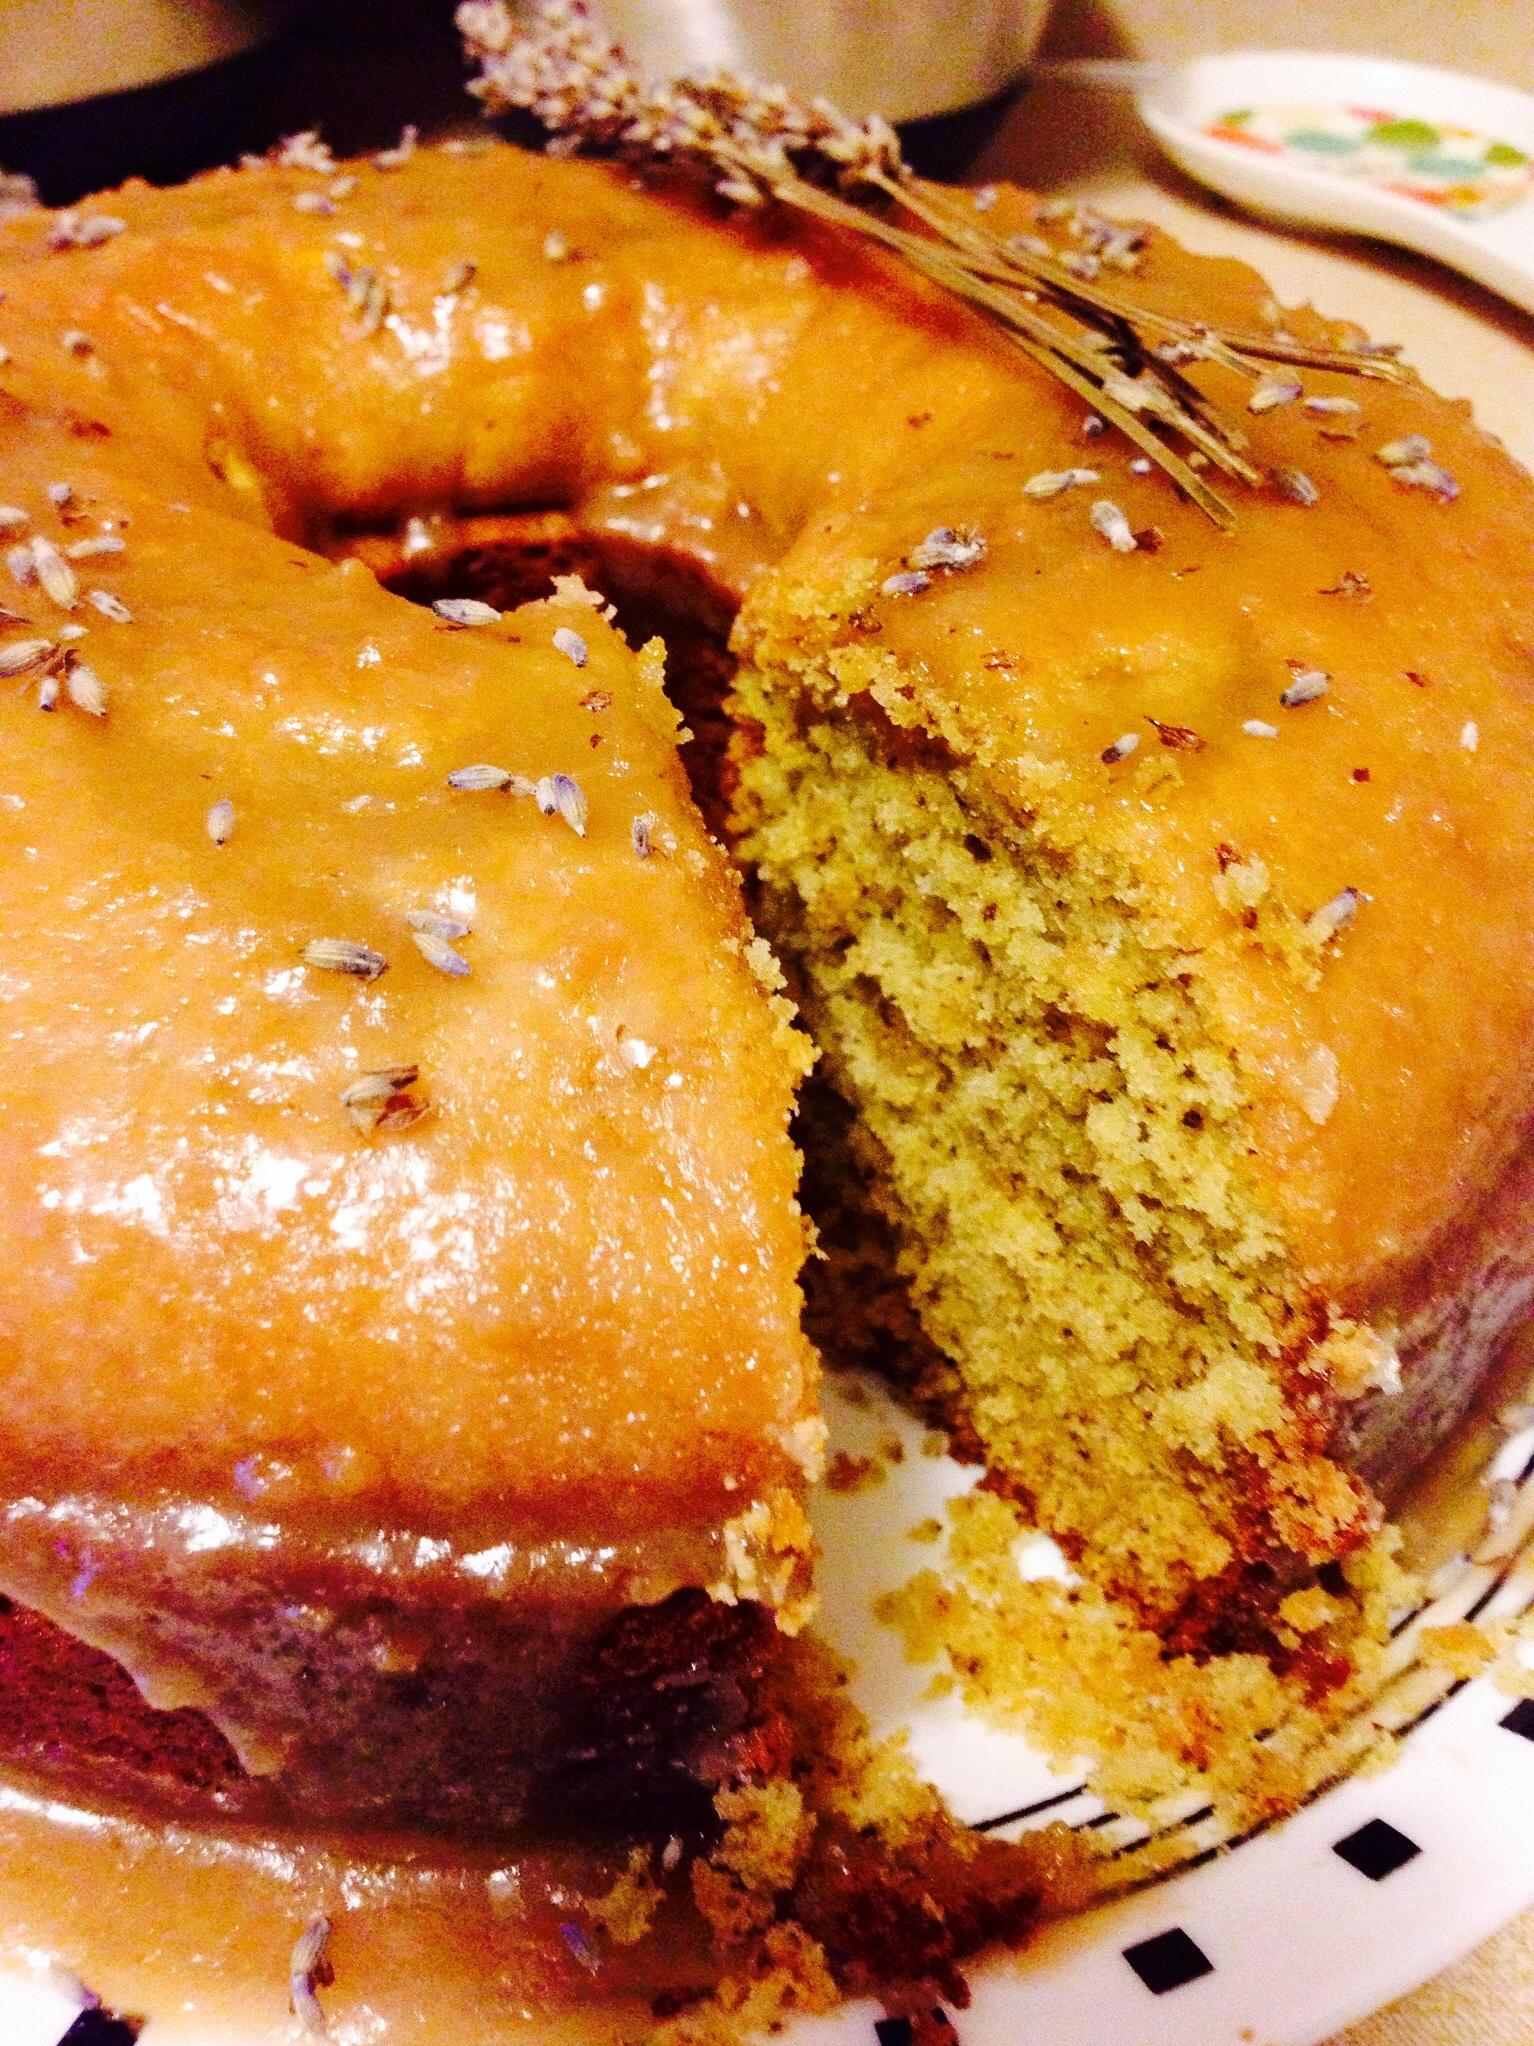 Delicious Lavender Pound Cake Recipe – Perfect for Tea Time